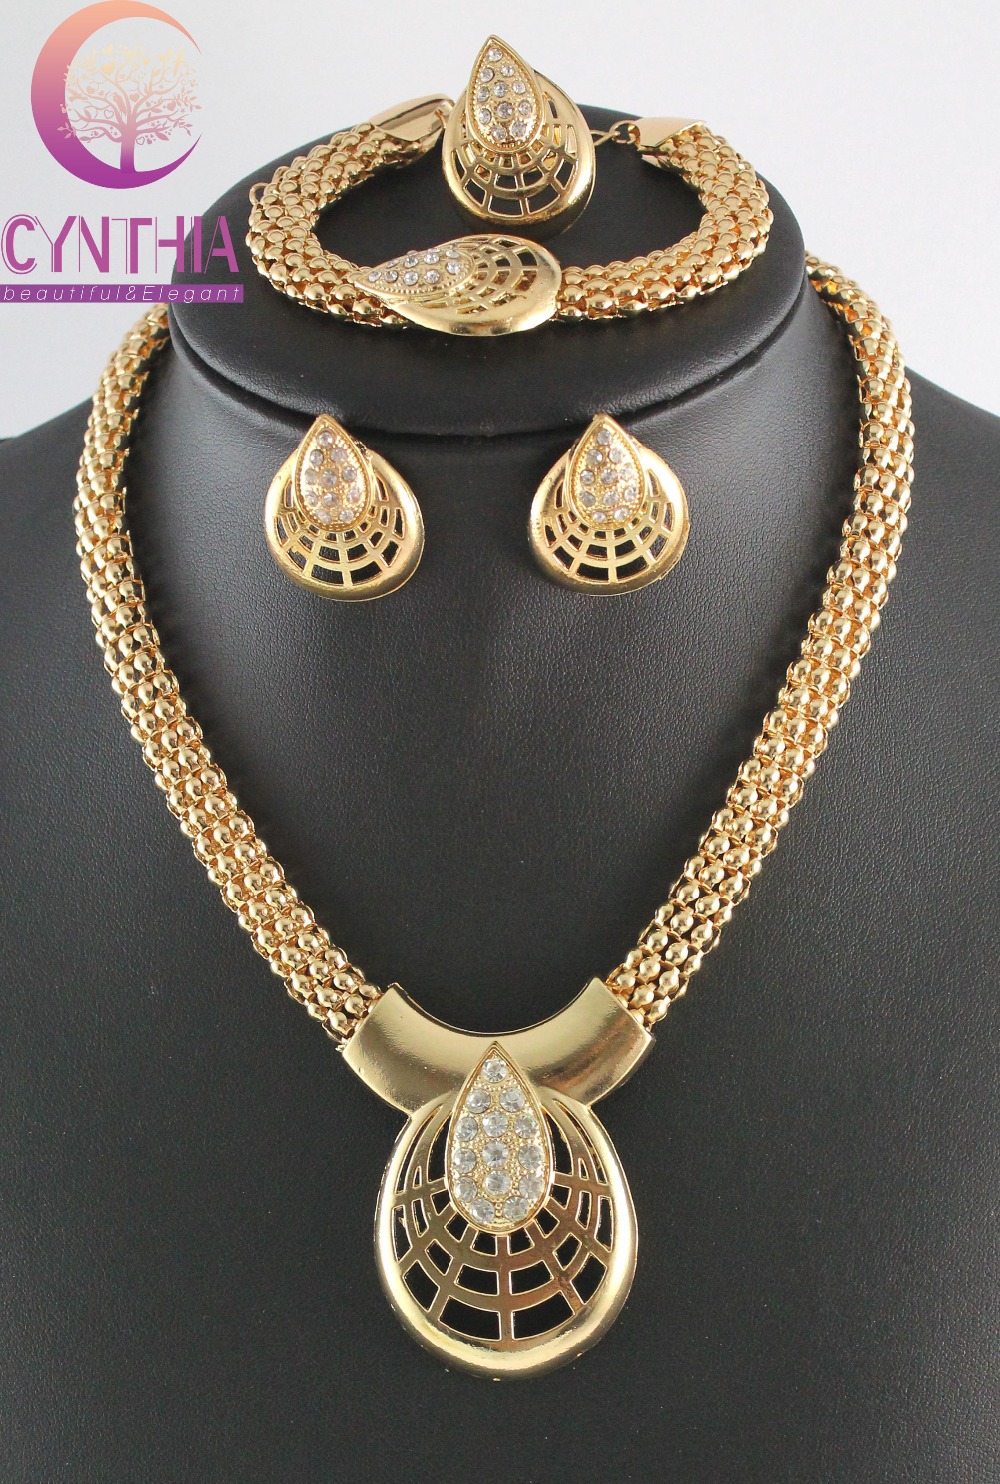 www.waldenwongart.com : Buy Hot Sale 18K Gold Plated Crystal African Costume Fashion Necklace Sets For ...